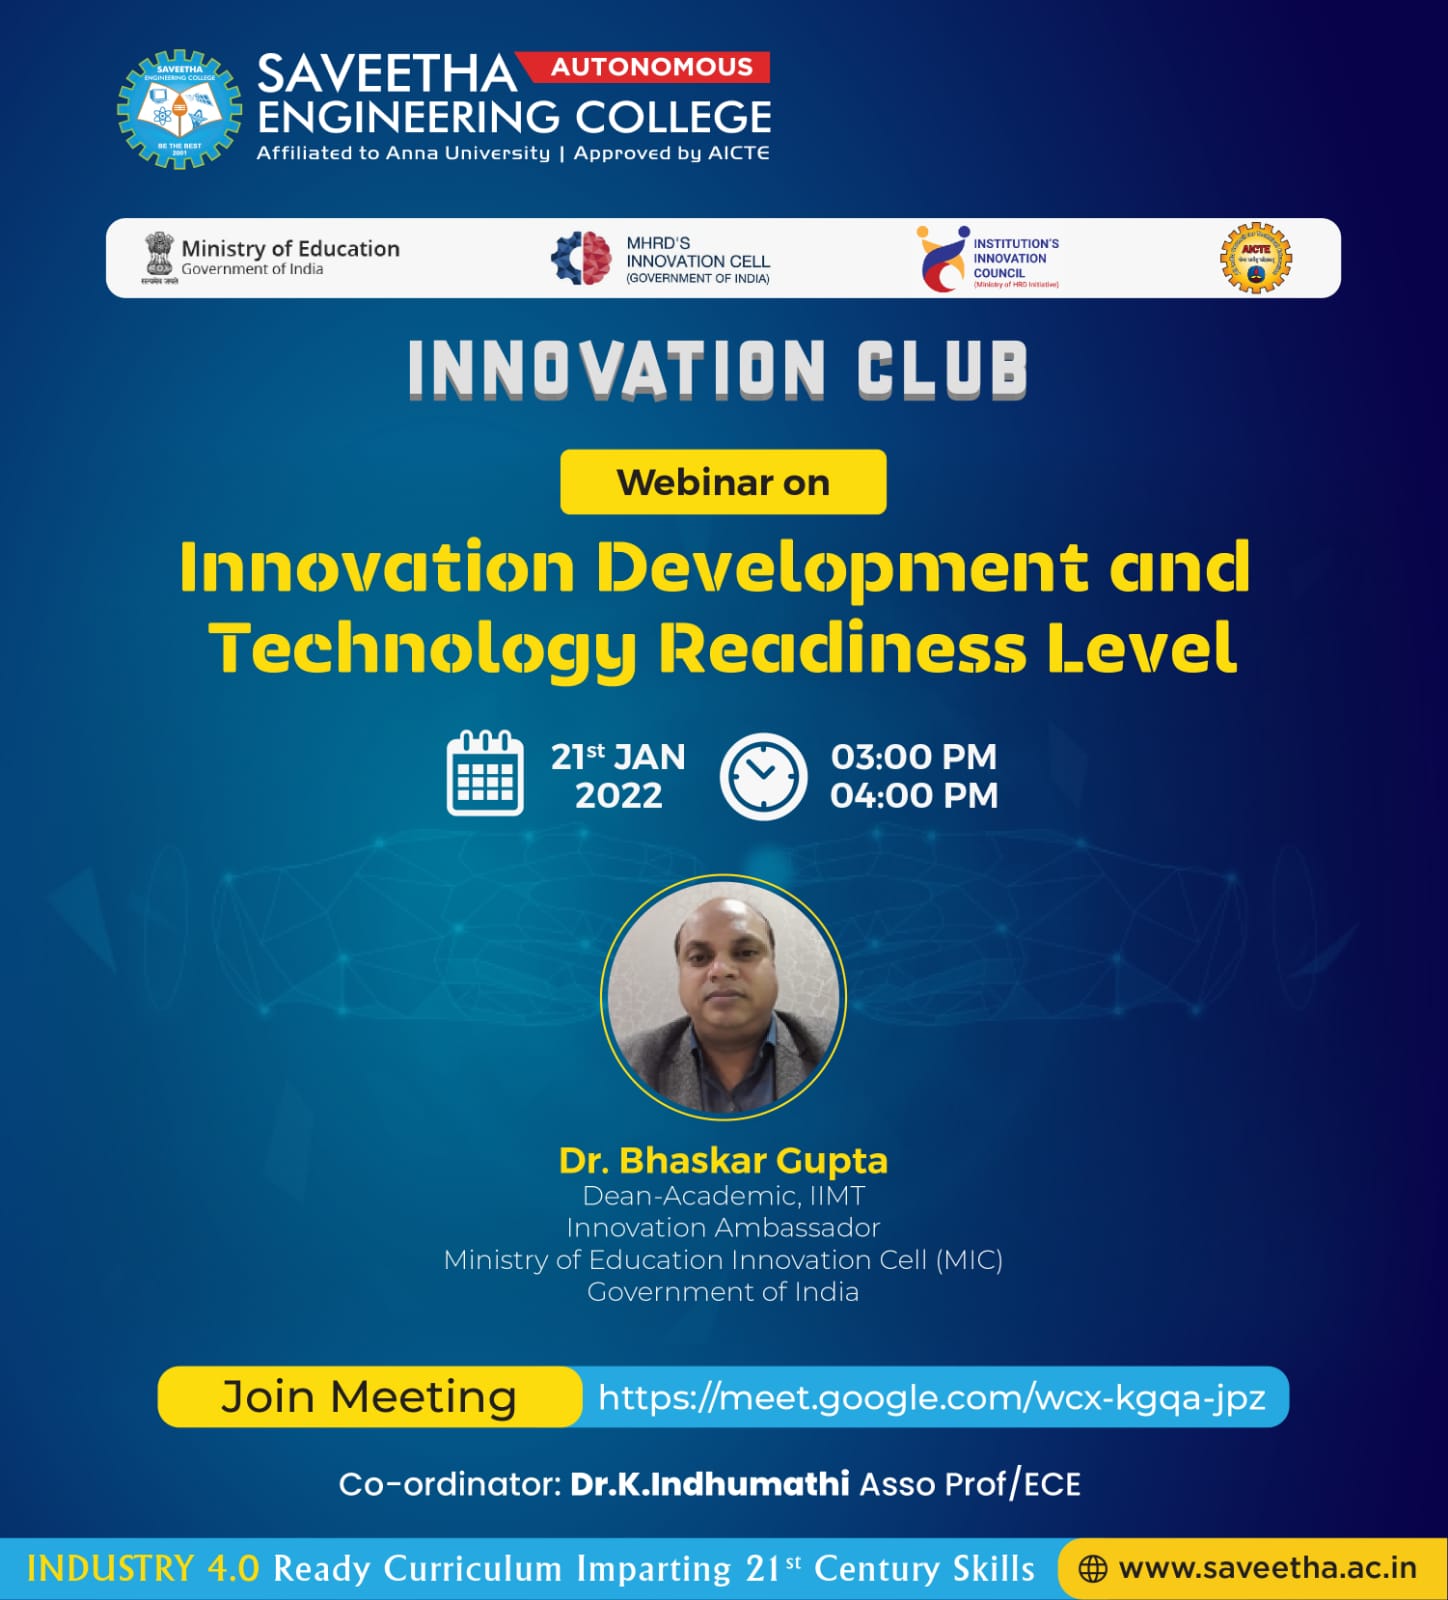 Innovation Club webinar at Saveetha Engineering College